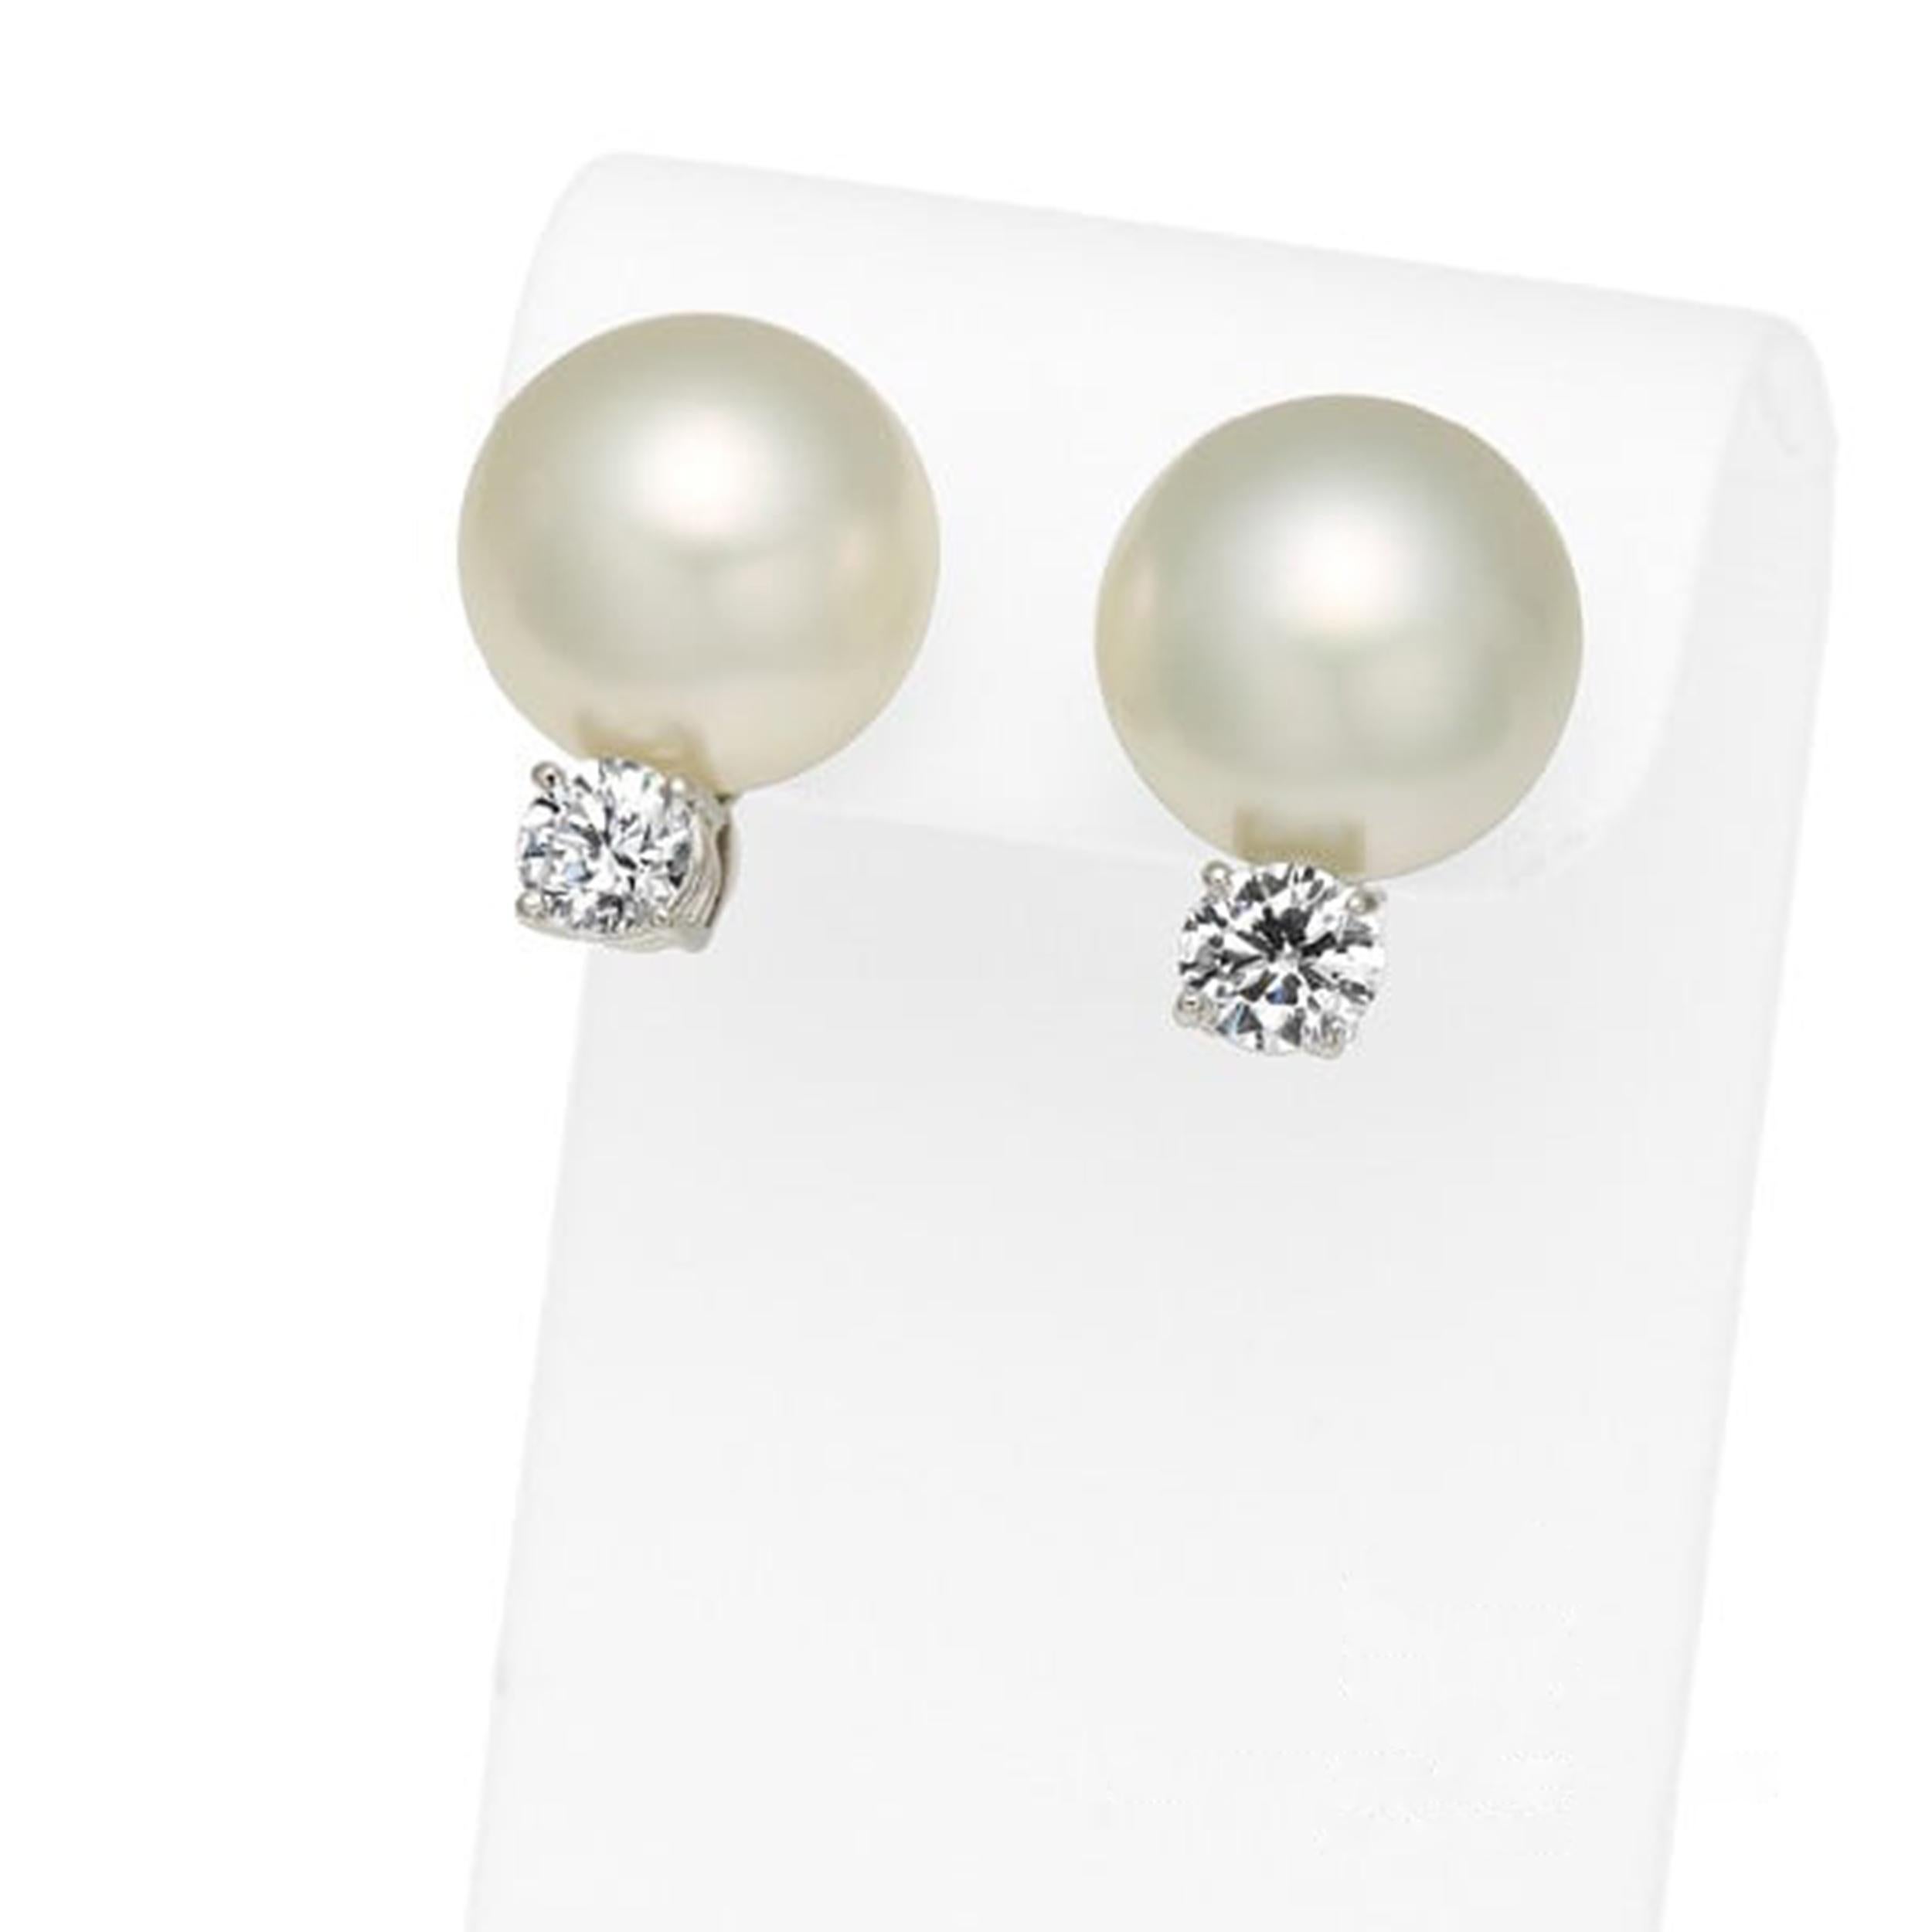 Artist Platinum Diamond Pearl Earrings  0.526ct & 0.505ct Diamonds  13.6mm Pearls For Sale